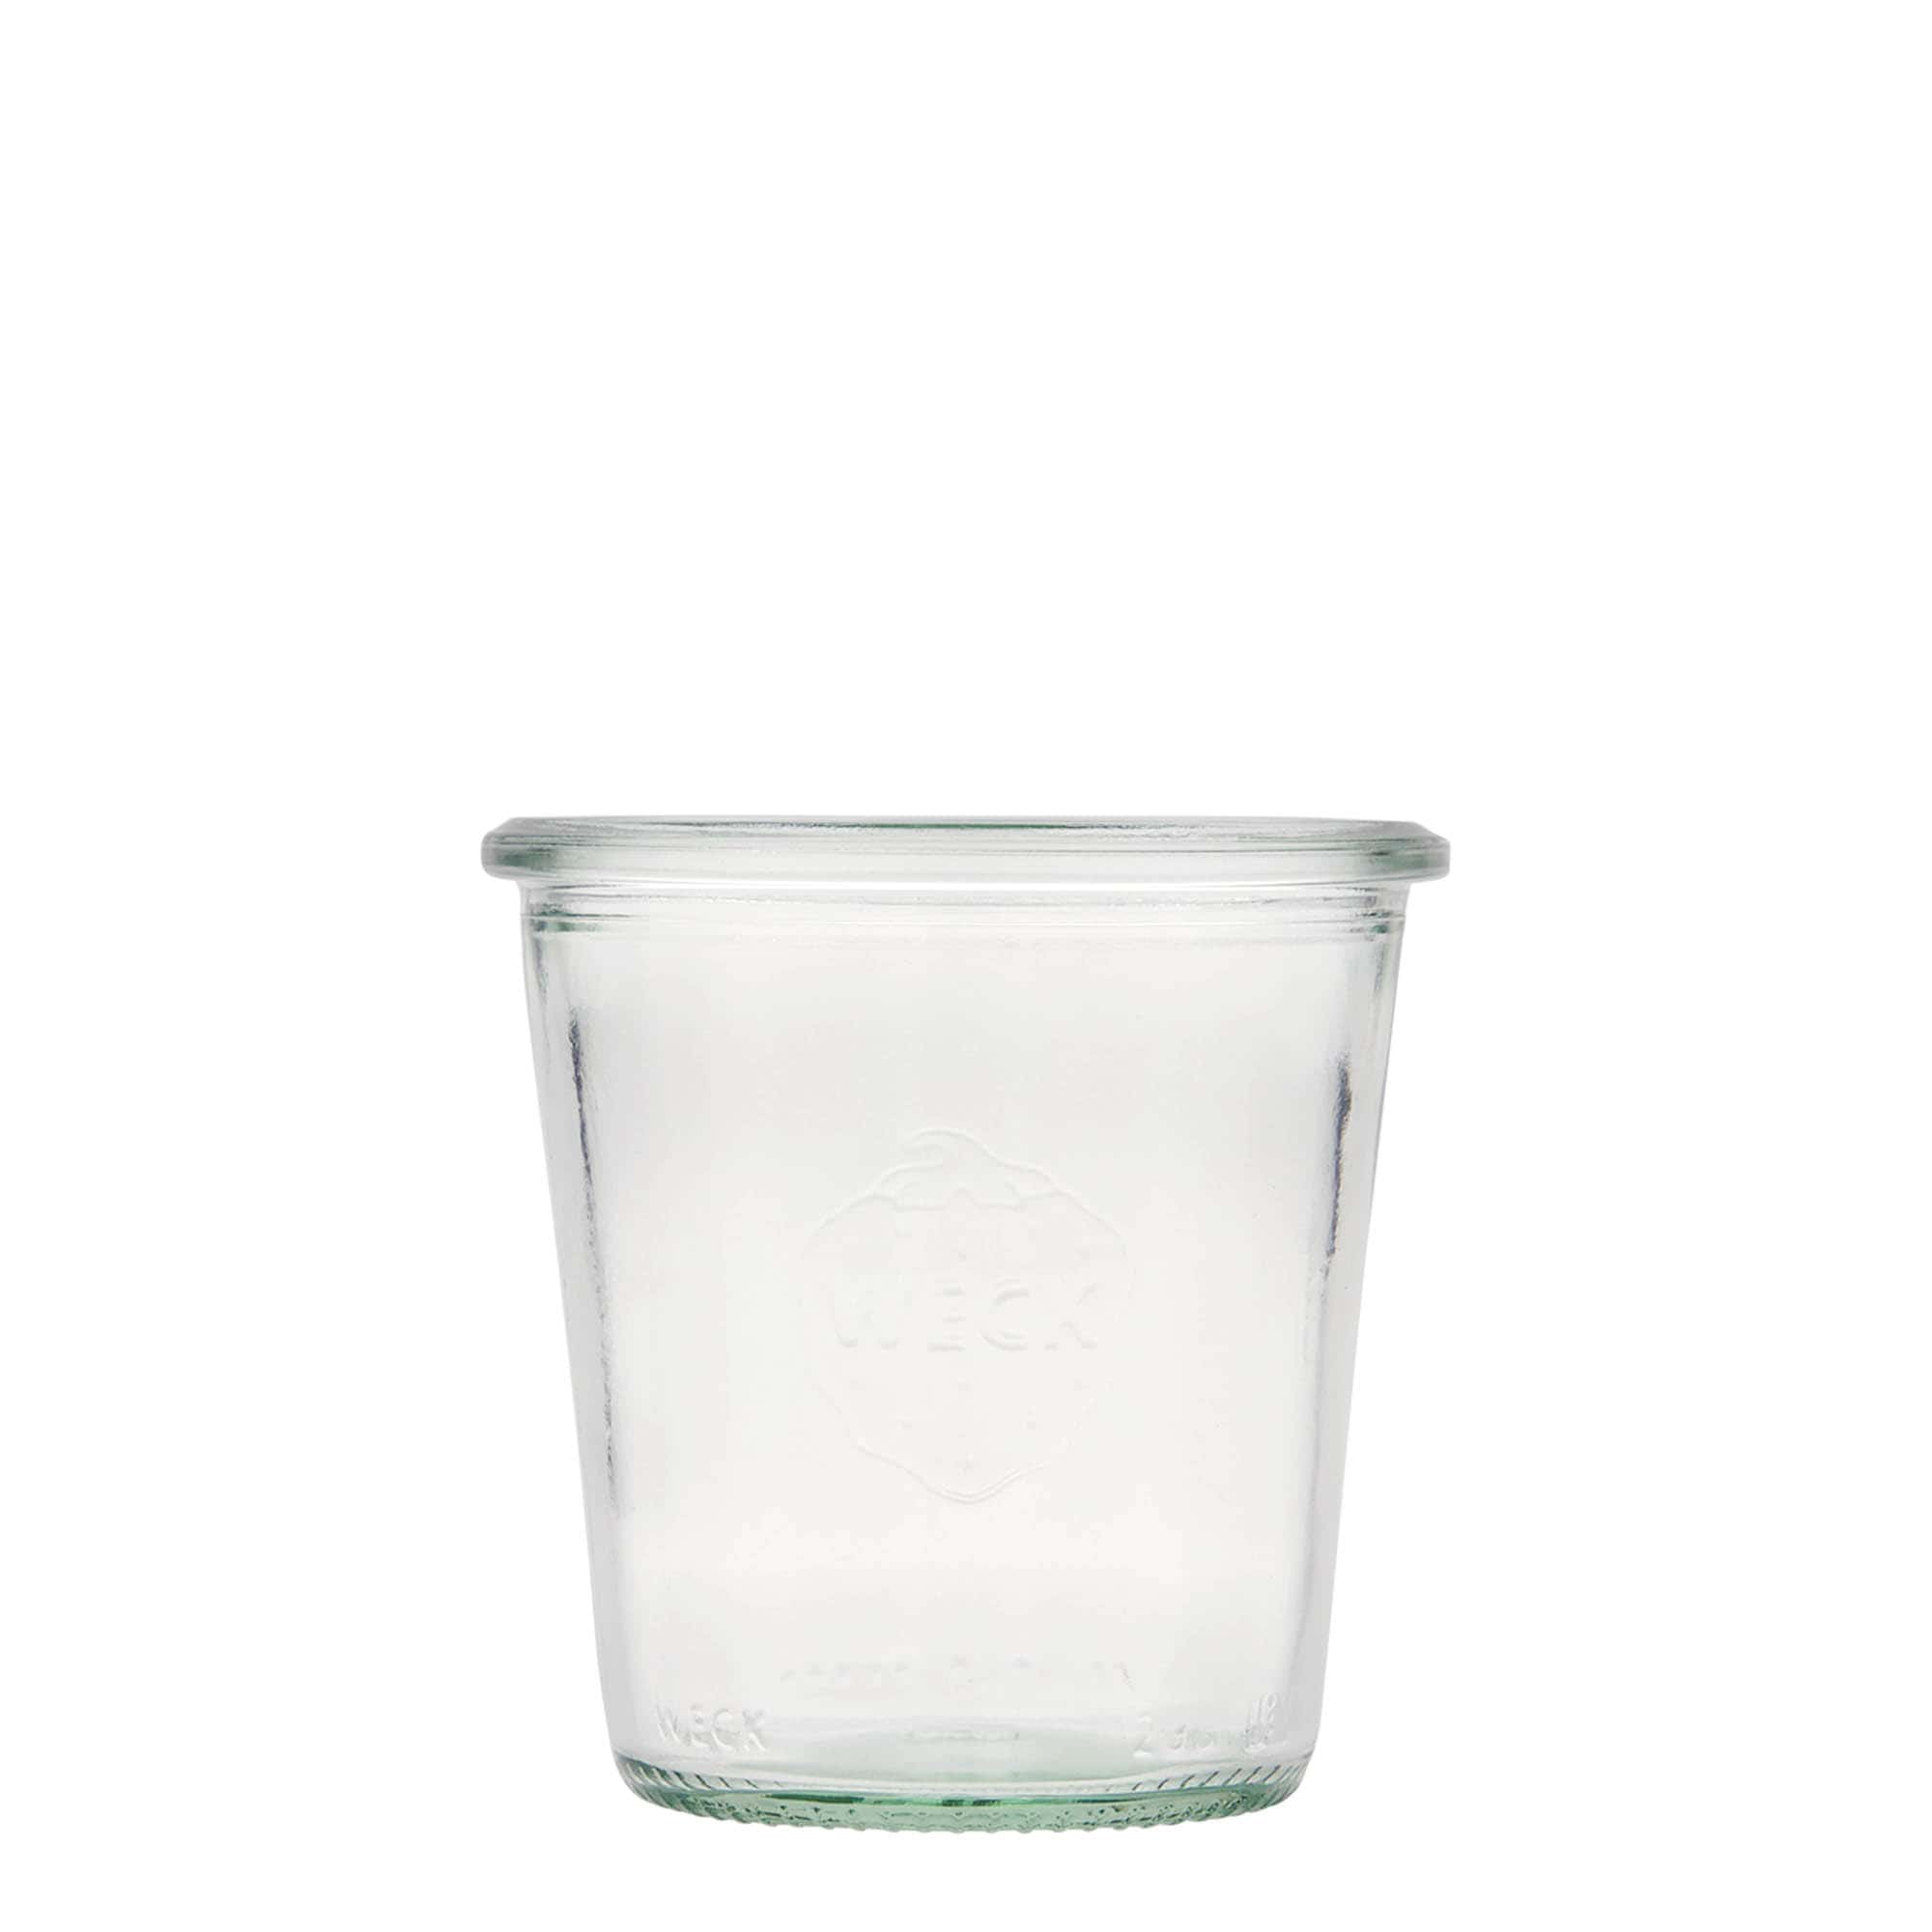 290 ml WECK cylindrical jar, closure: round rim